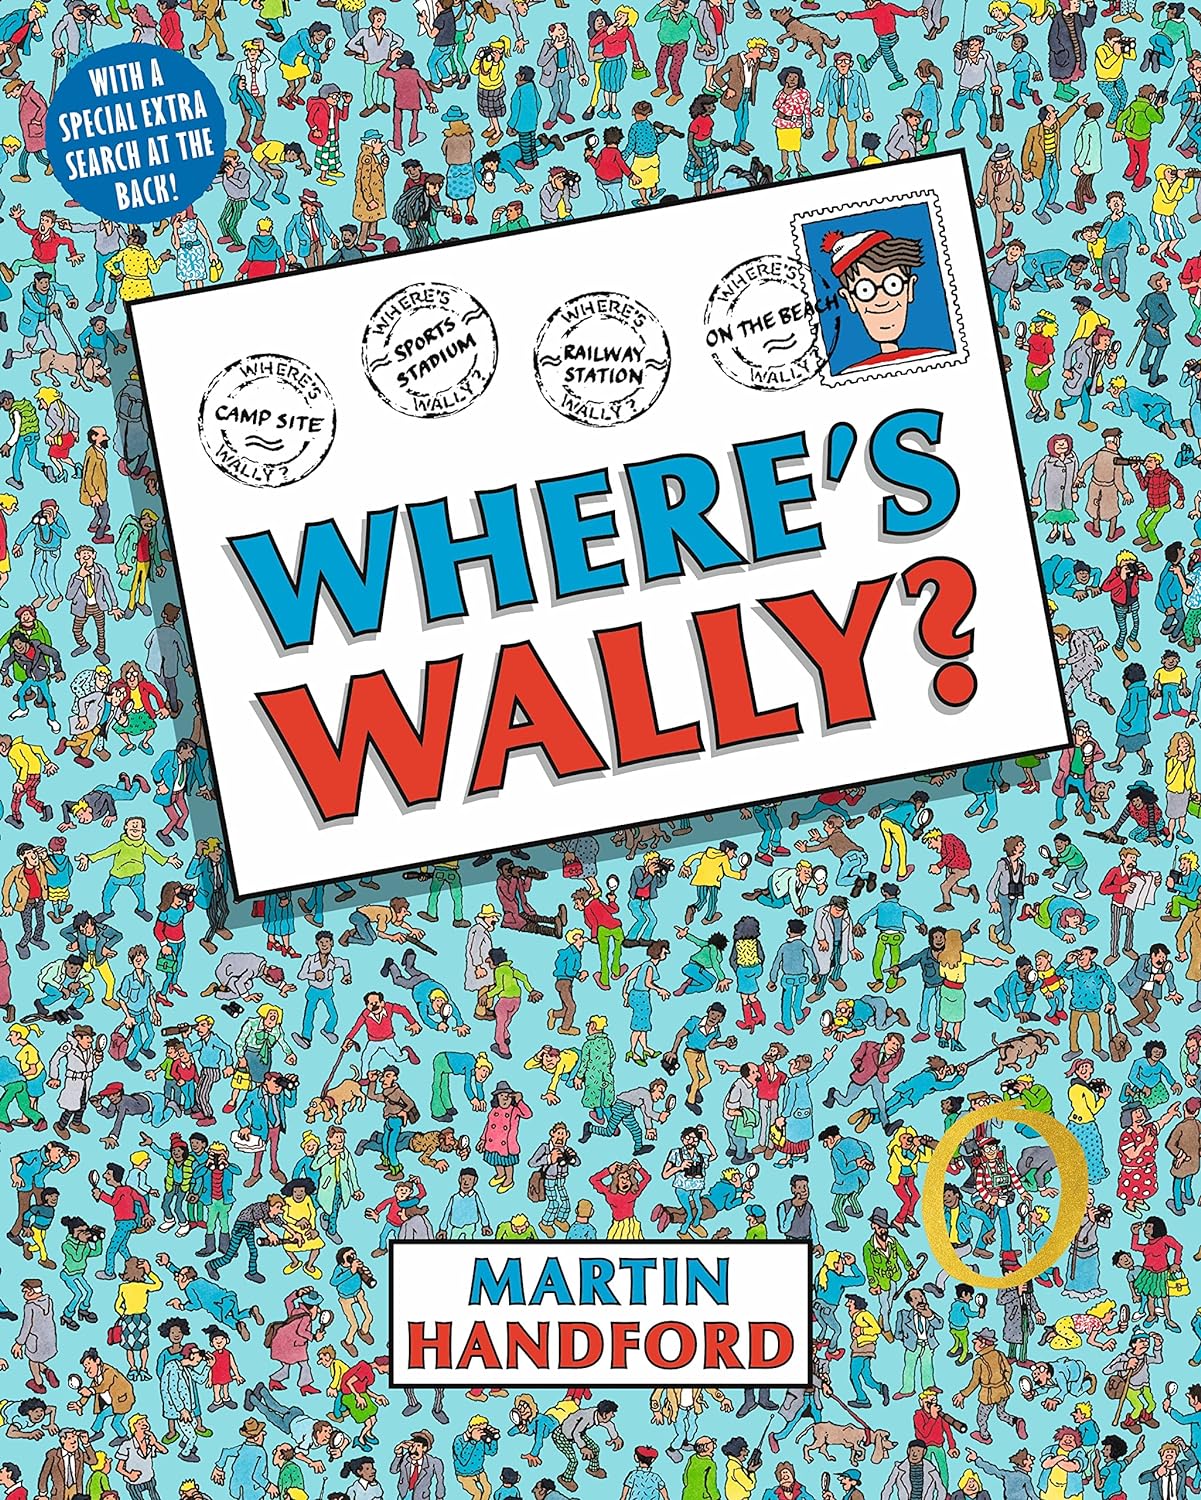 Where's Wally? Activity Book